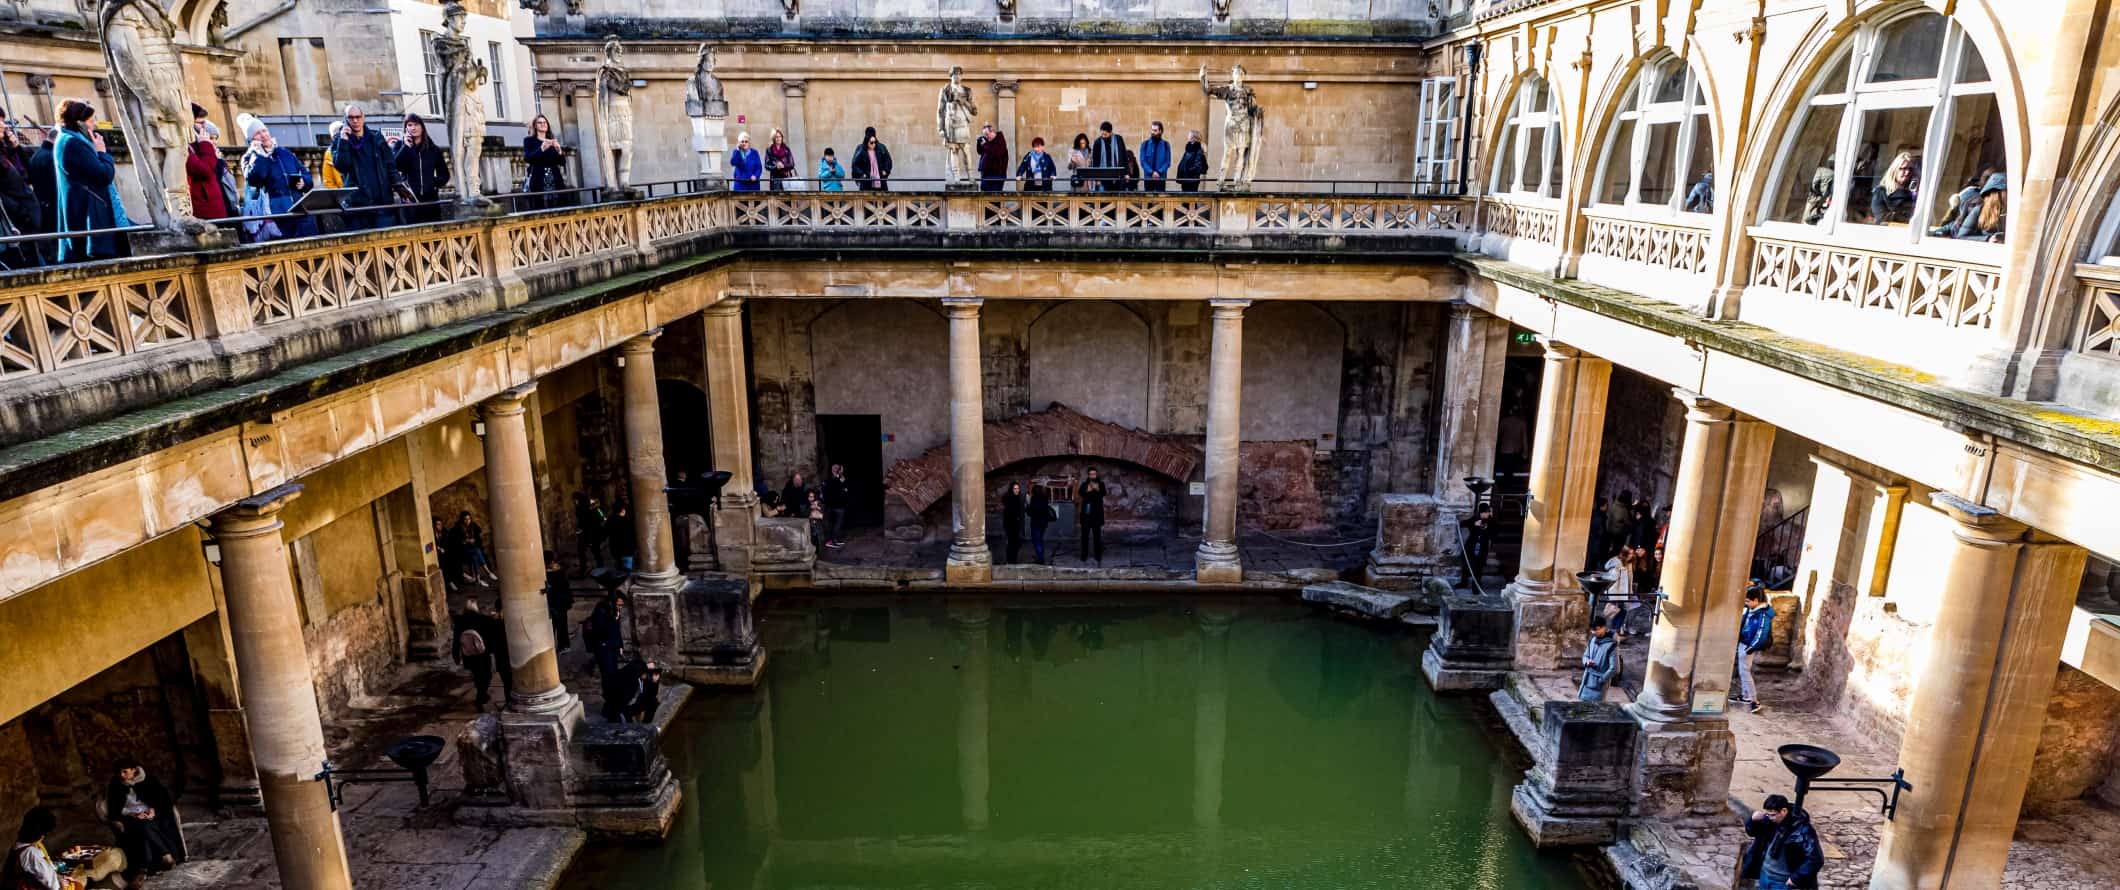 The historic Roman baths in Bath, England